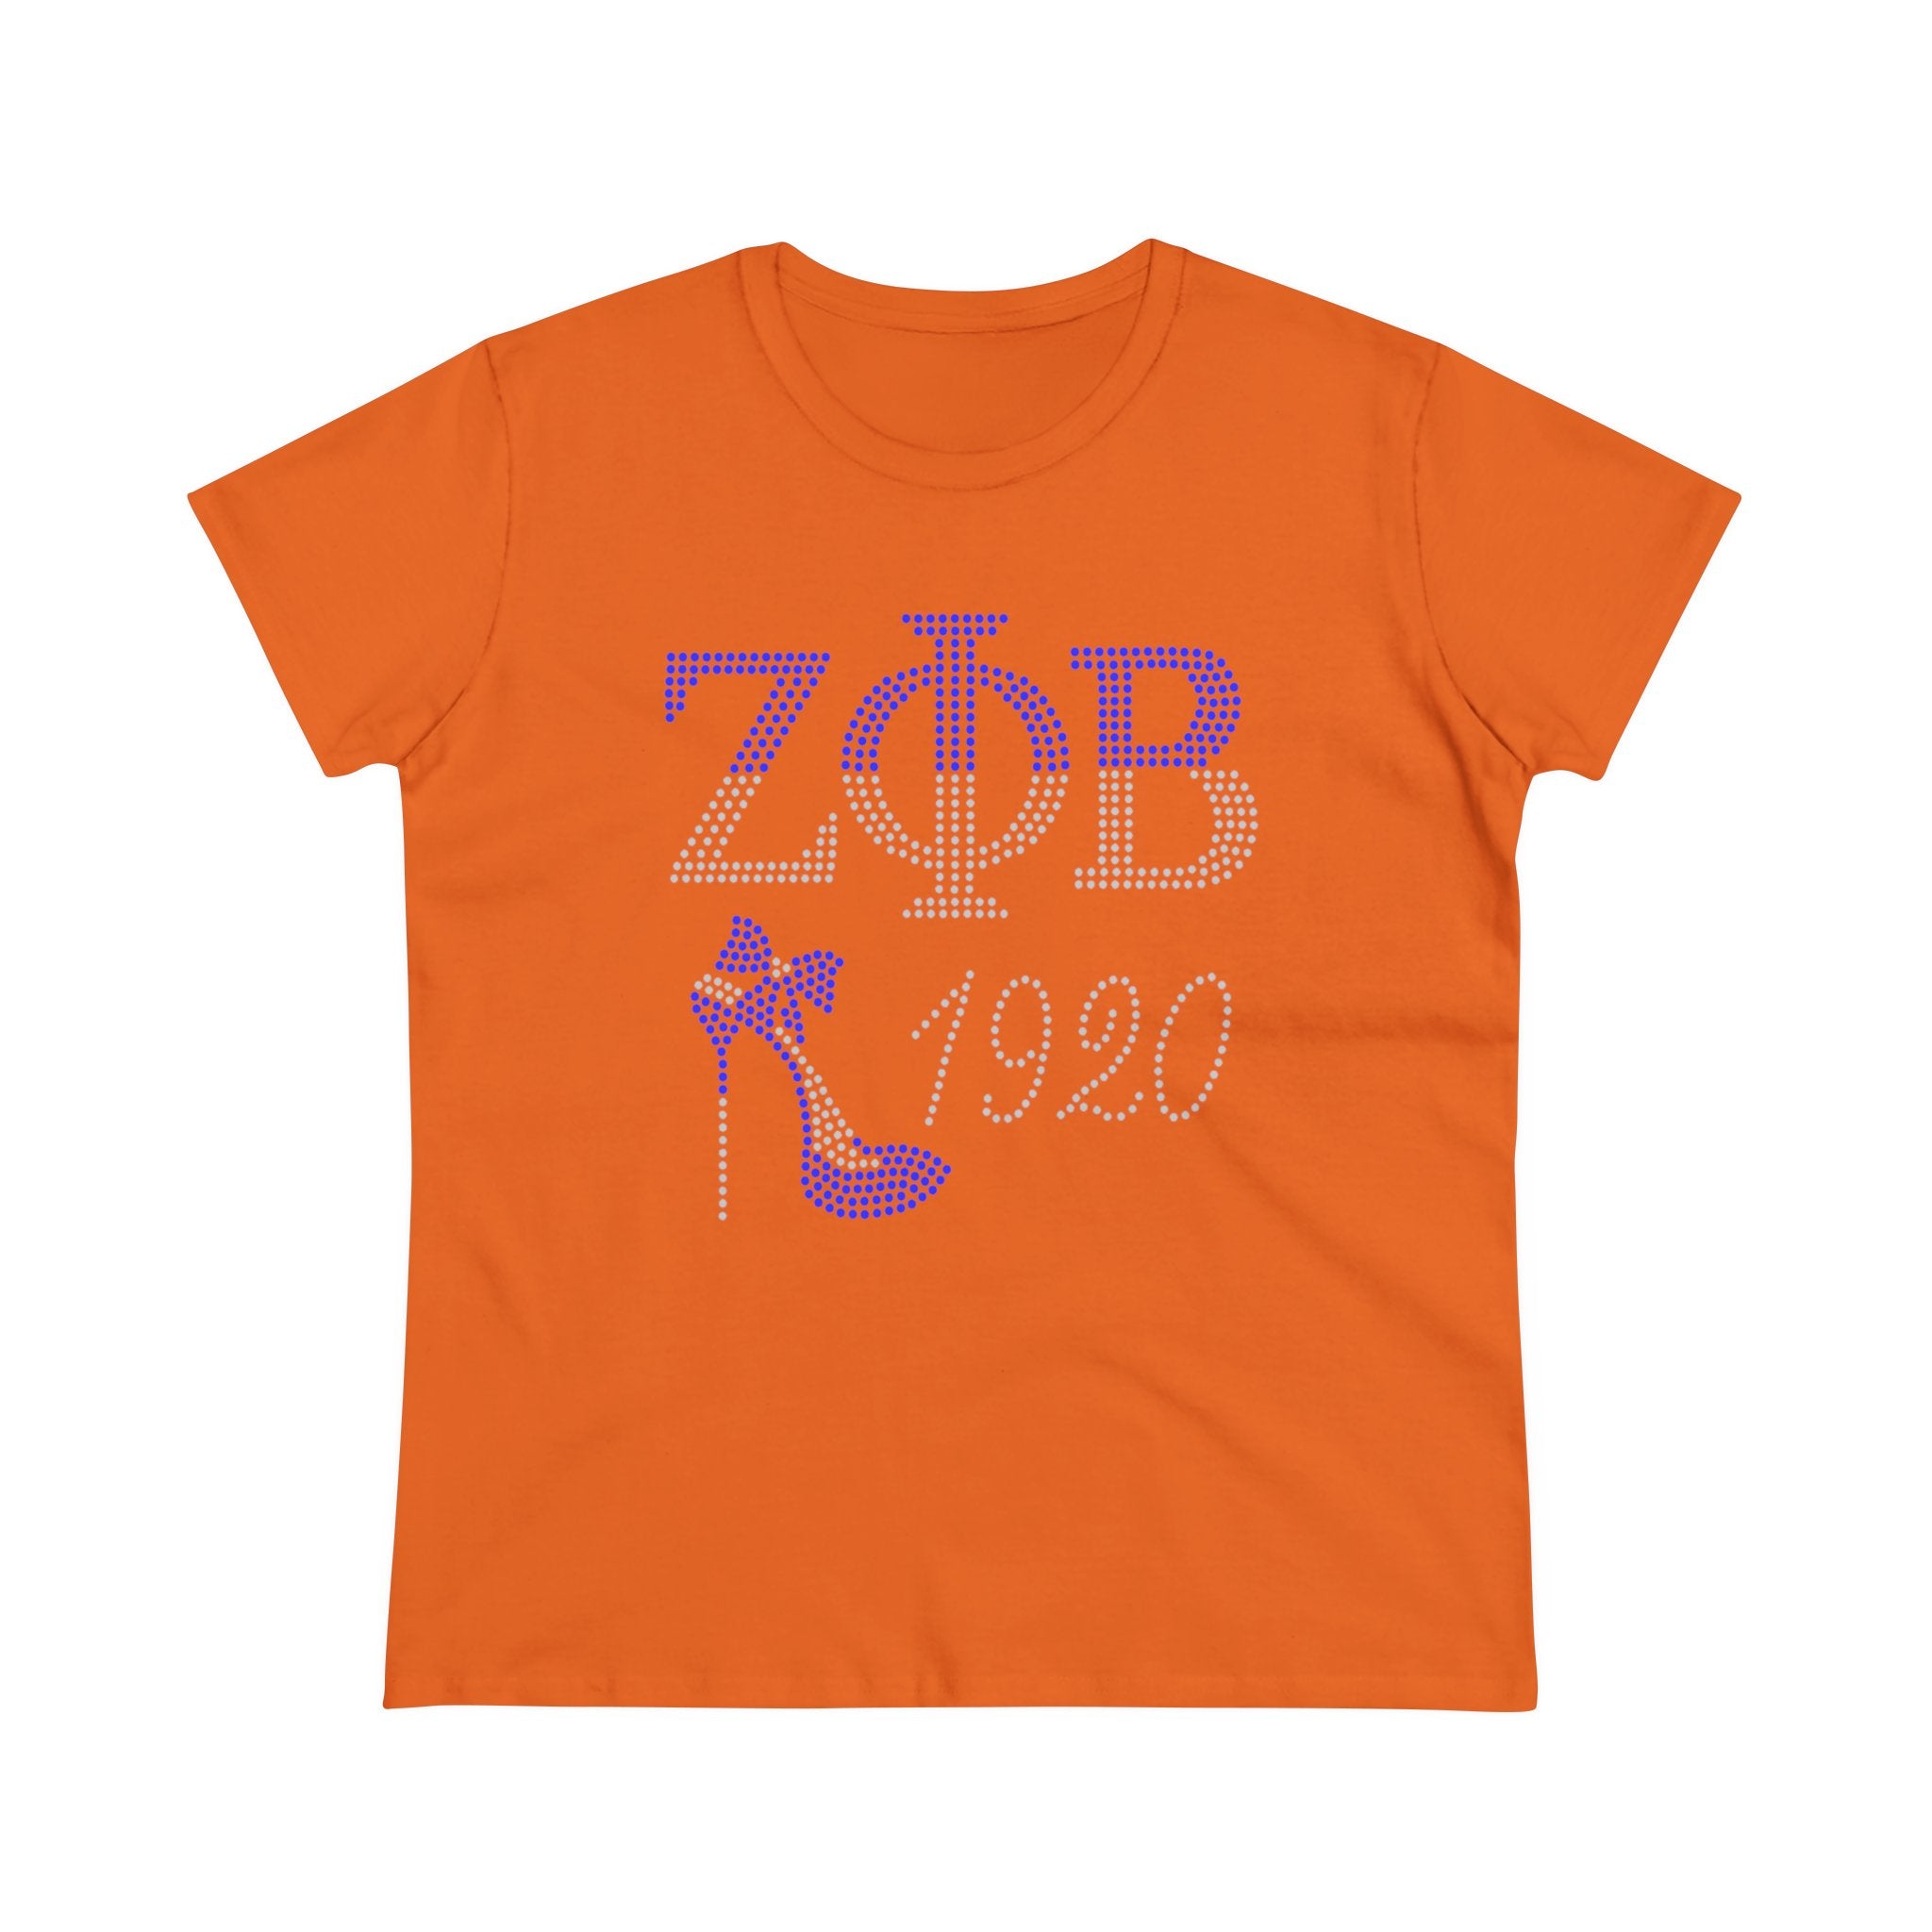 Zeta Phi Beta Women's Shirt